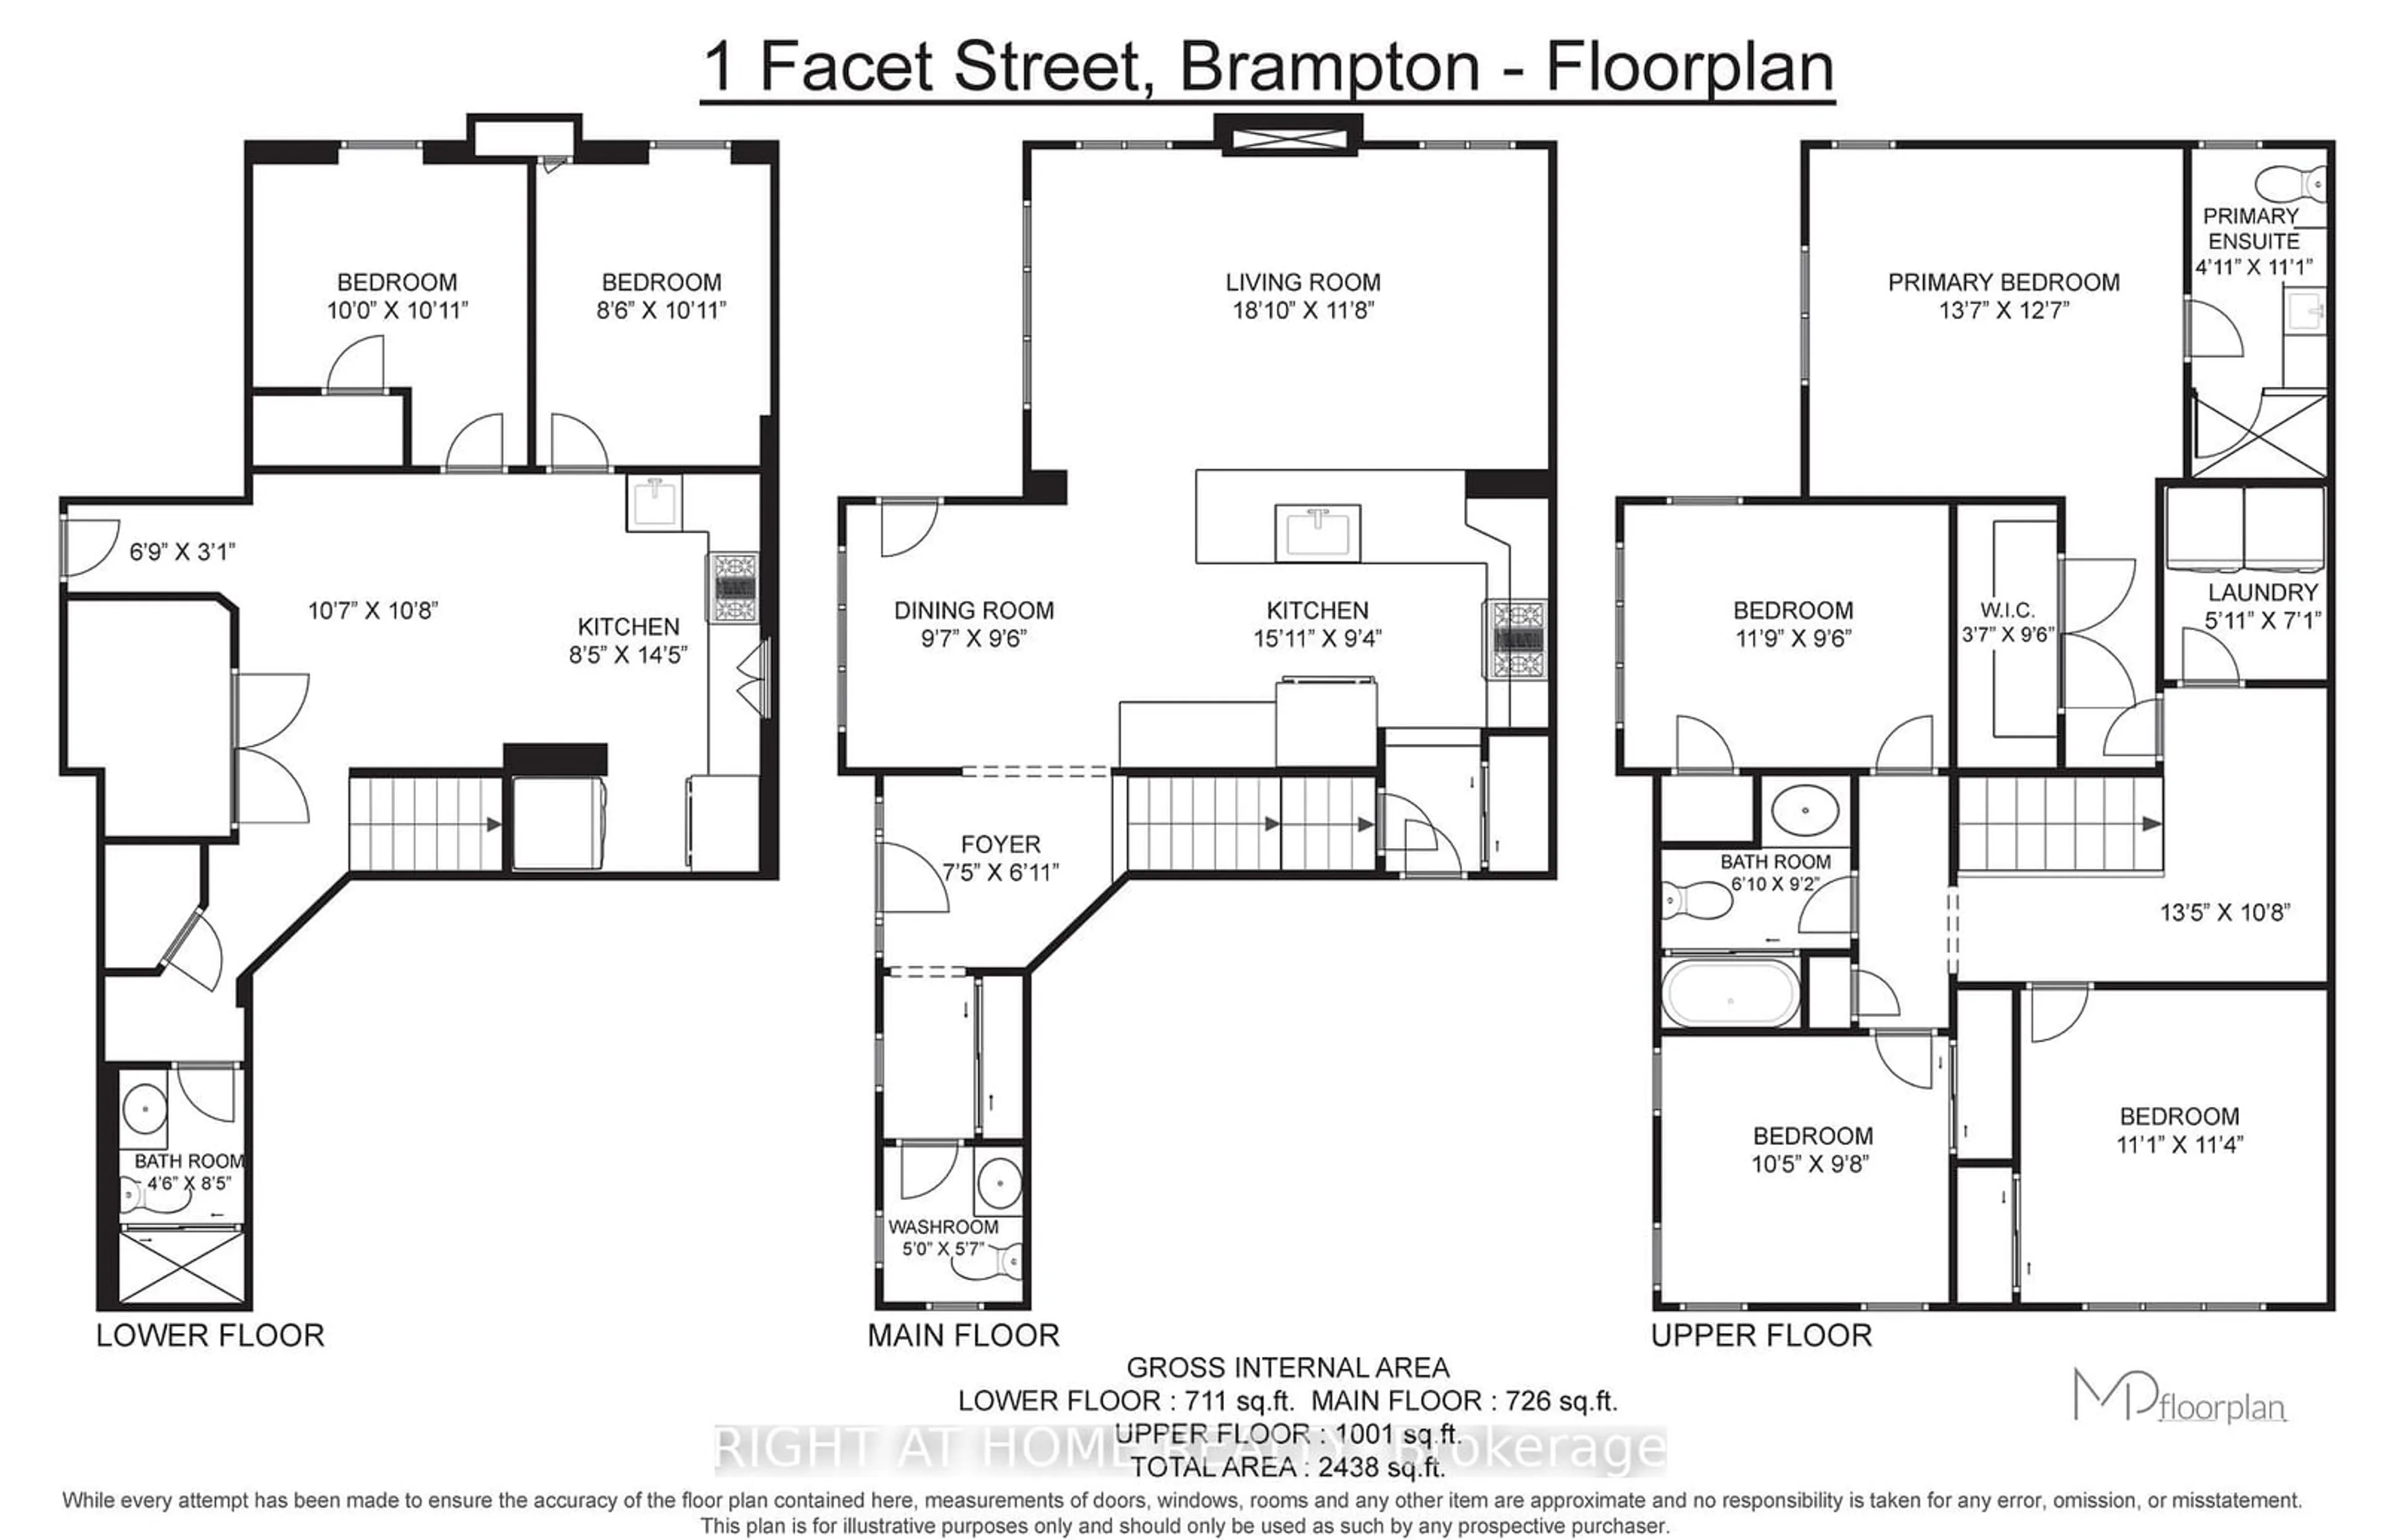 Floor plan for 1 Facet St, Brampton Ontario L7A 4S8